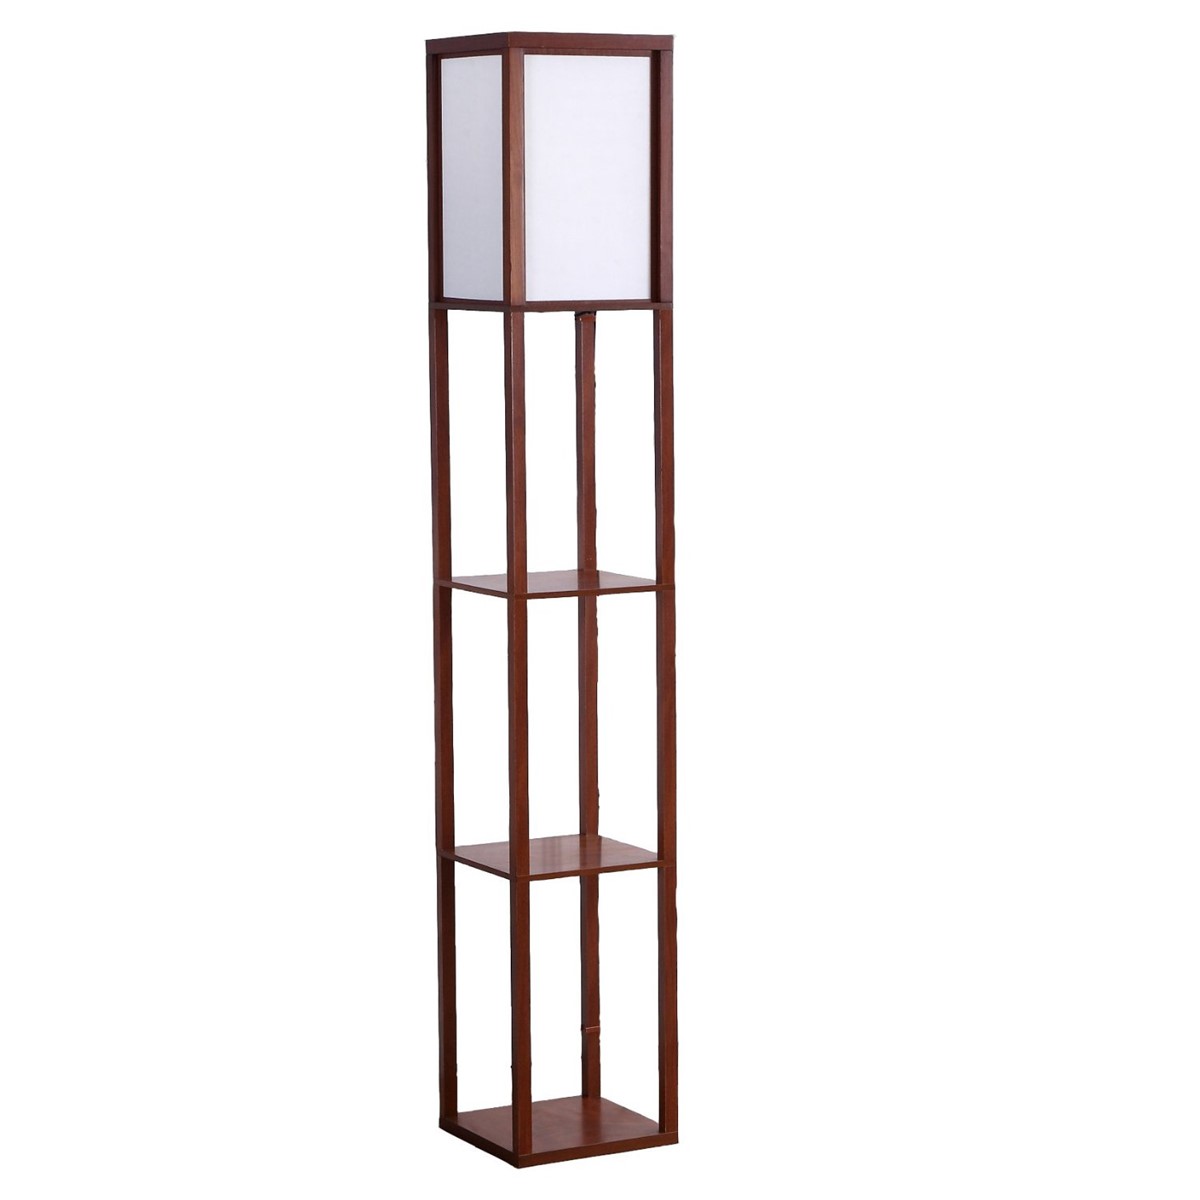 Storge Shelf Floor Lamp Natural Wood Frame with Shelves Lighting for Your Living Room Bedroom